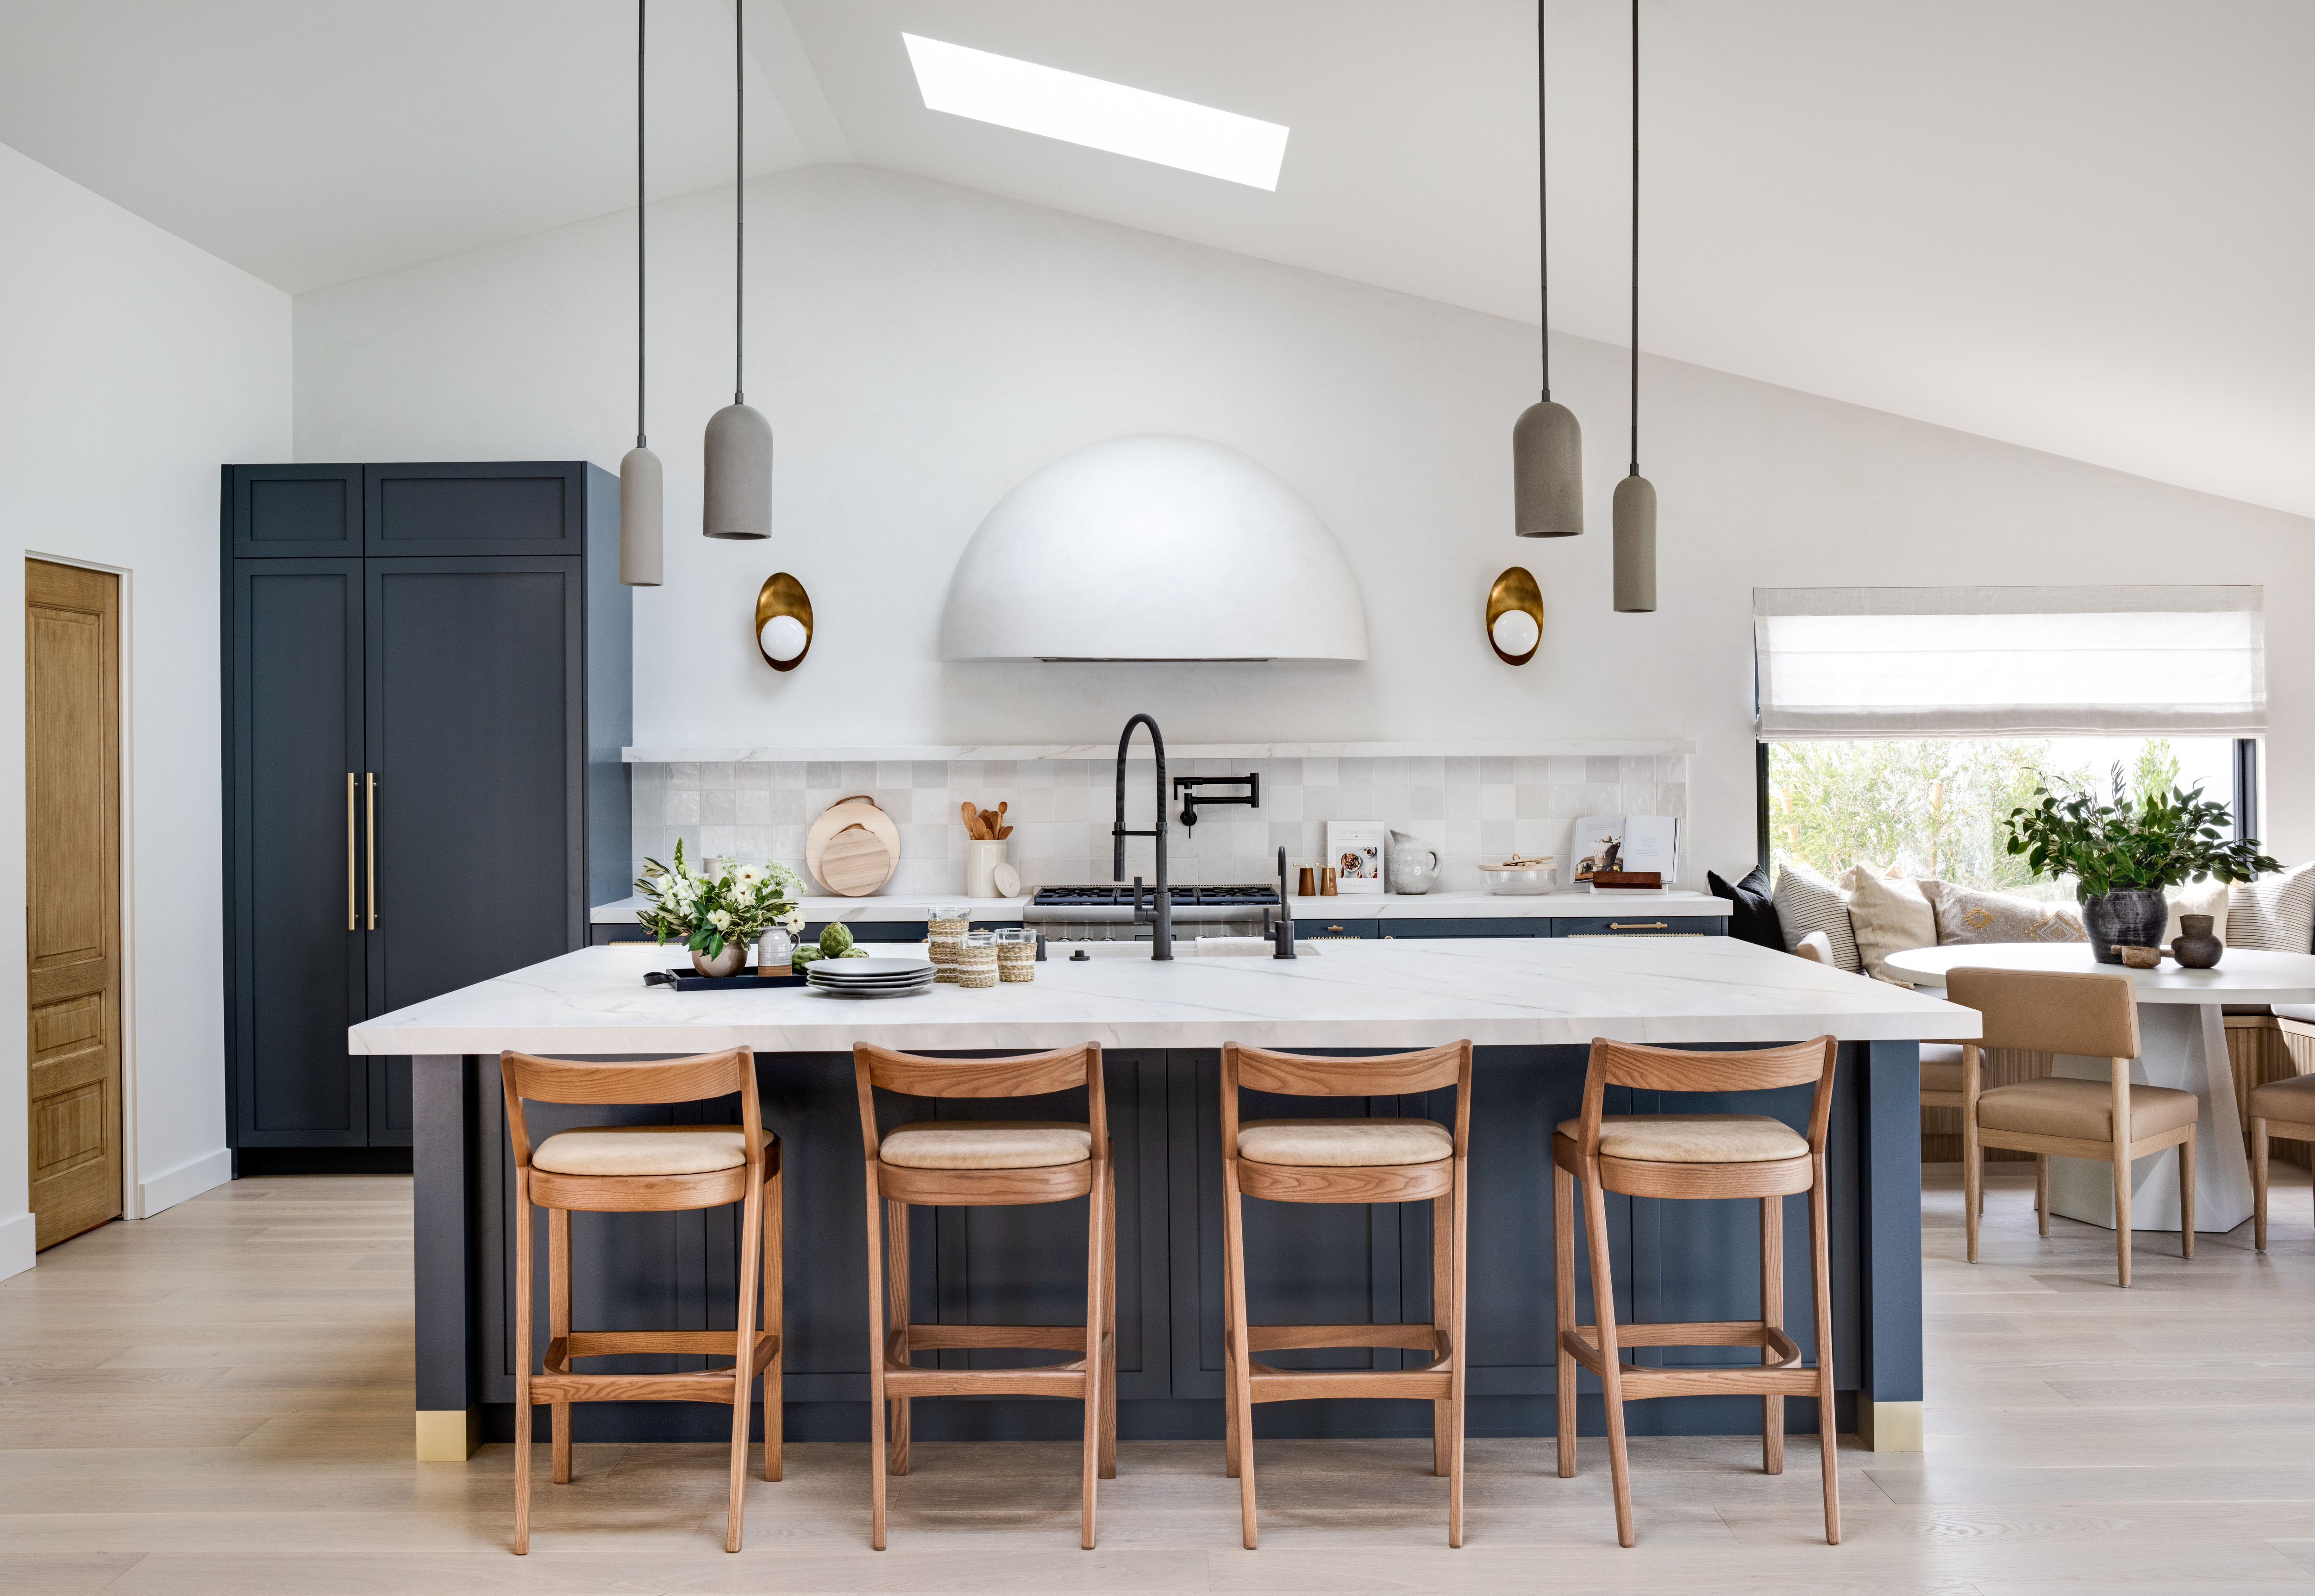 Kitchen island ideas – 18 ways to design the perfect kitchen ...